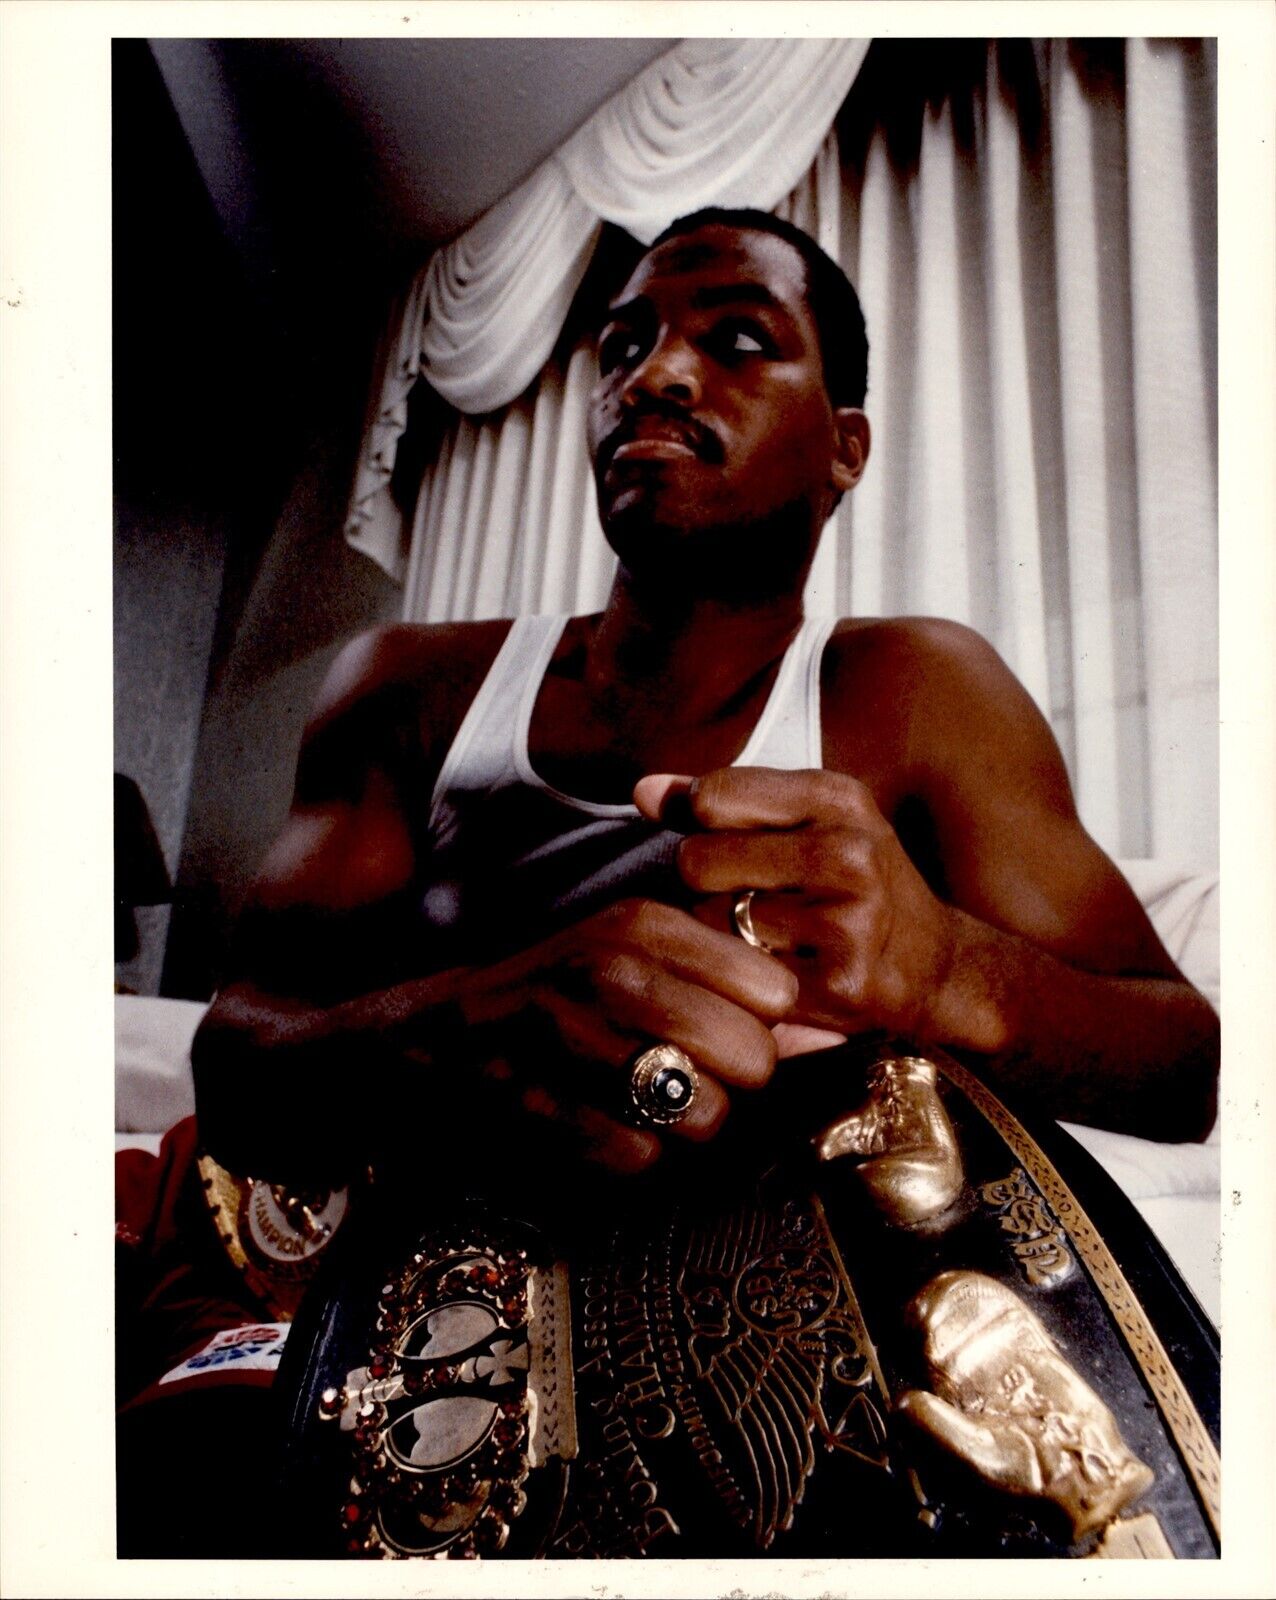 LG22 1990 Original Color Photo KELVIN SEABROOKS Bantamweight Boxing Champion